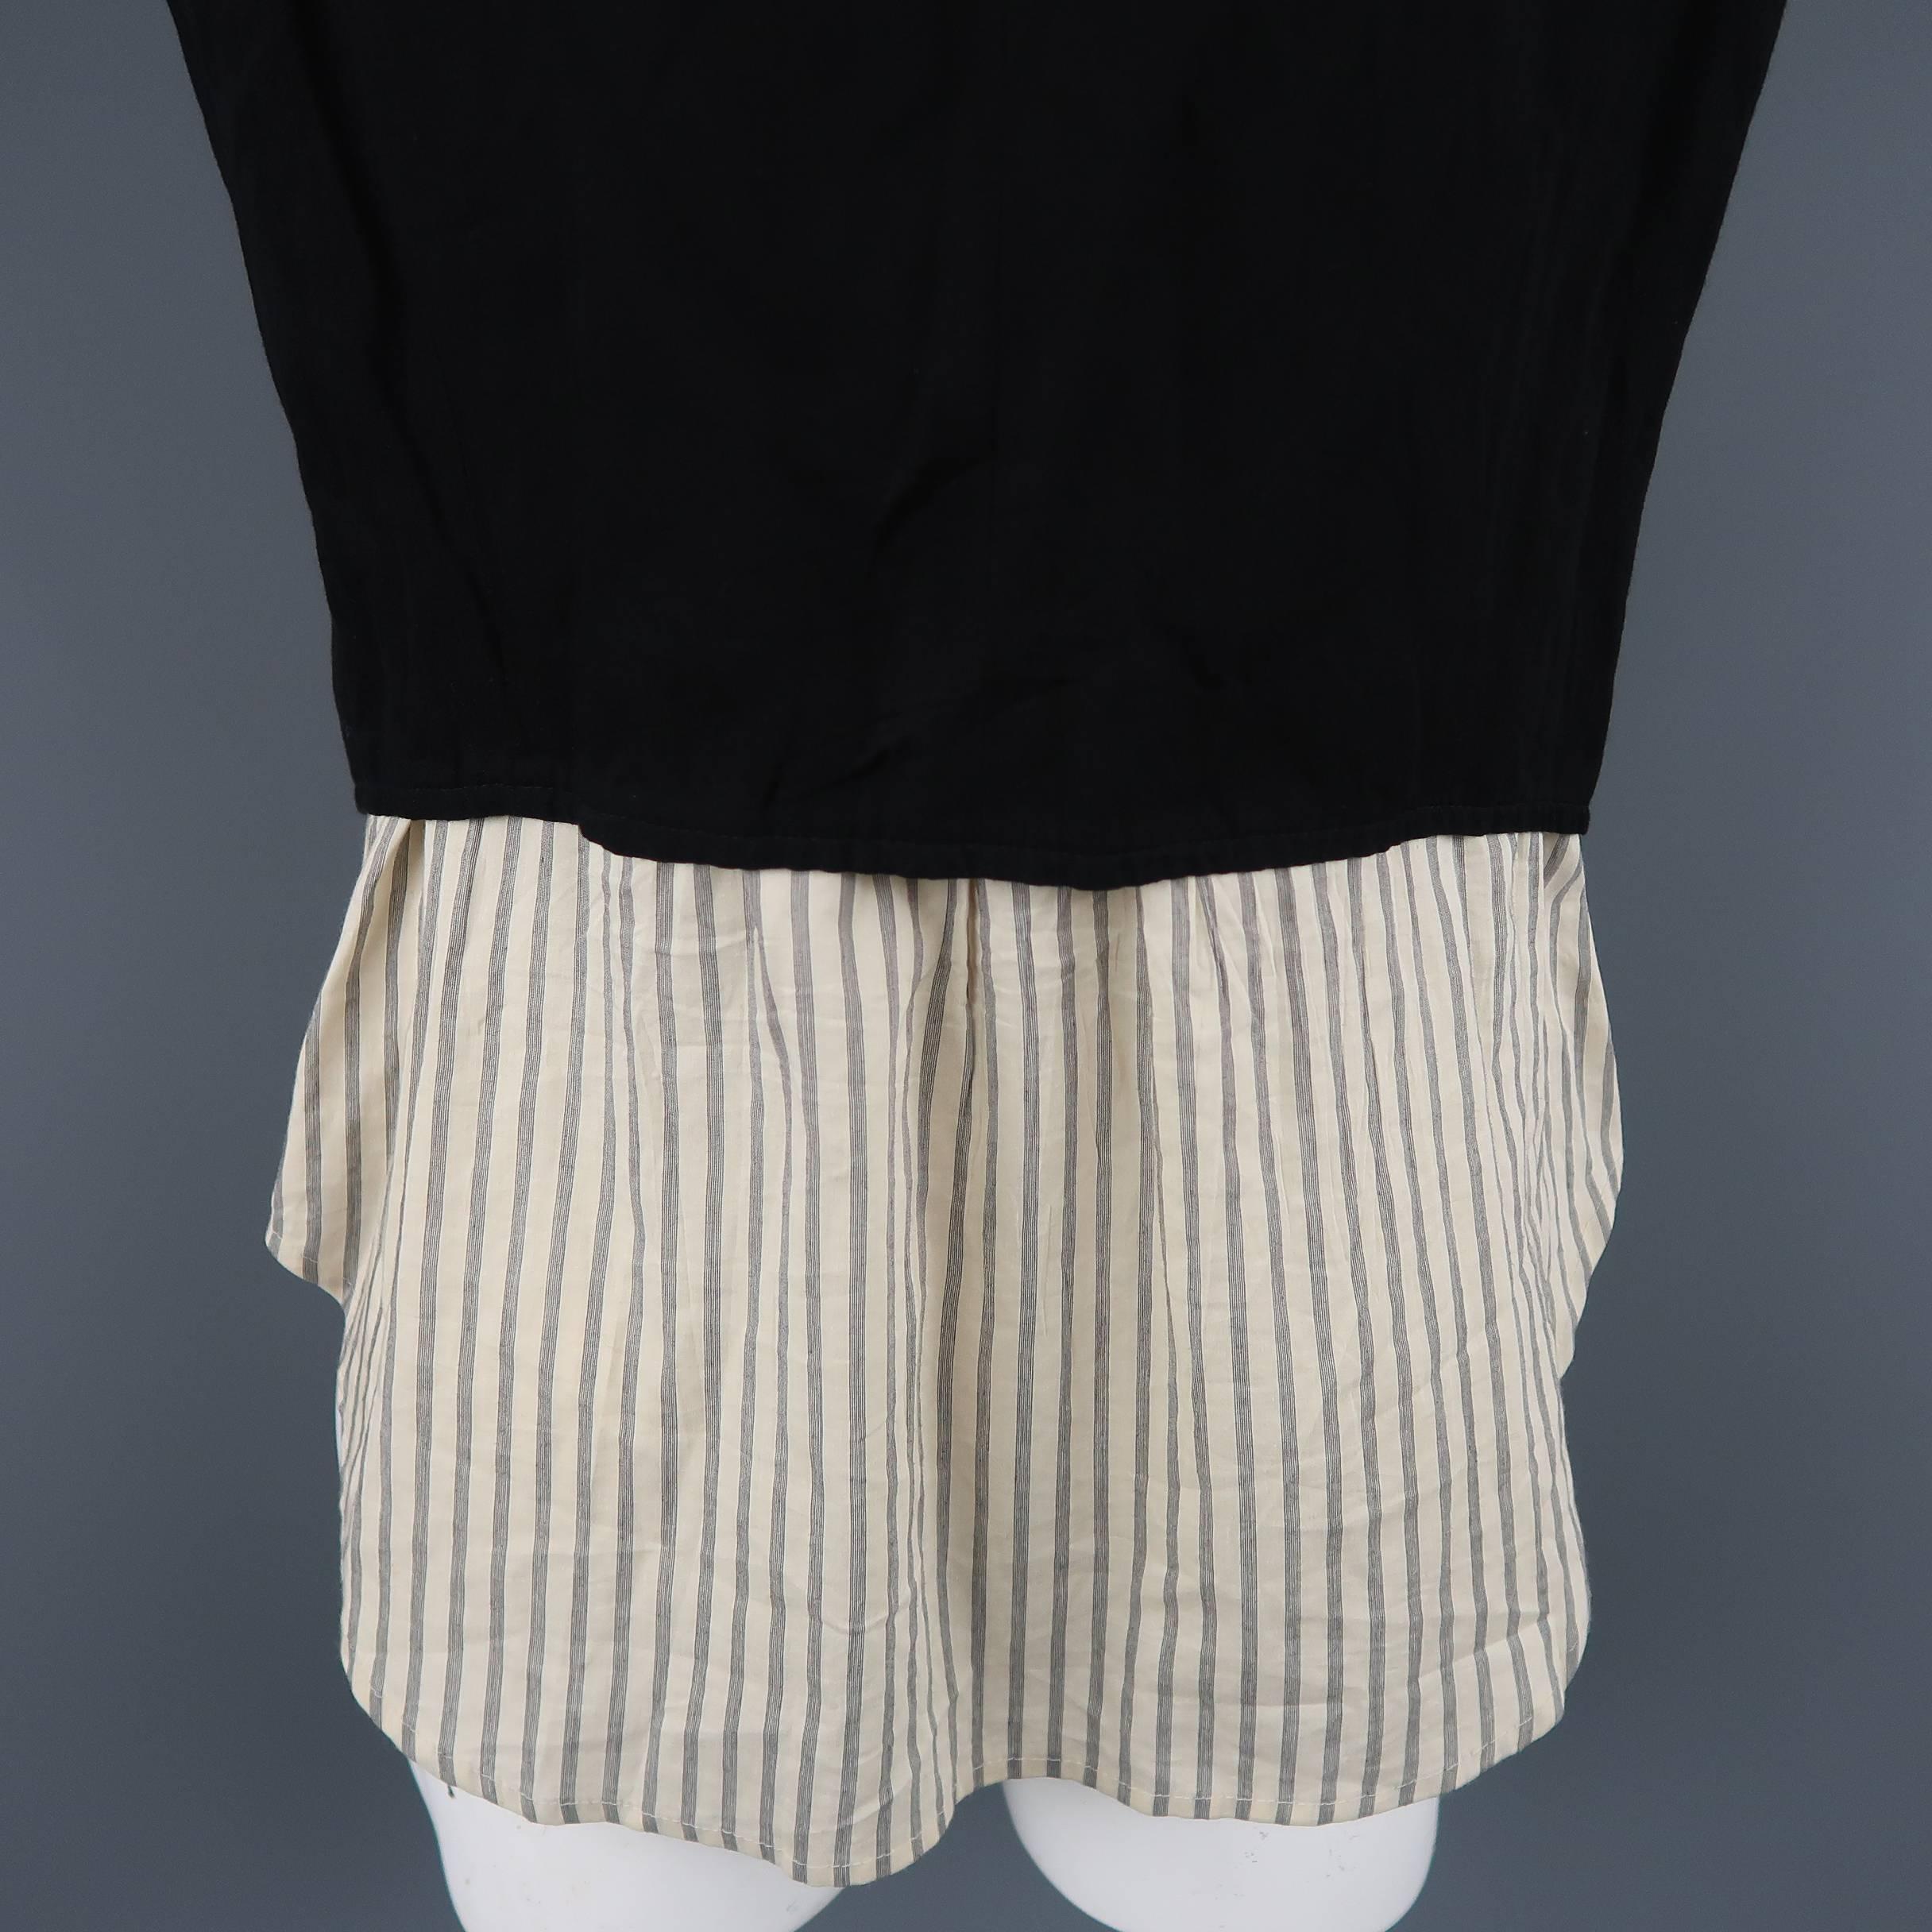 Ann Demeulemeester Men's Black and Beige Striped Shirt Layered Vest 4